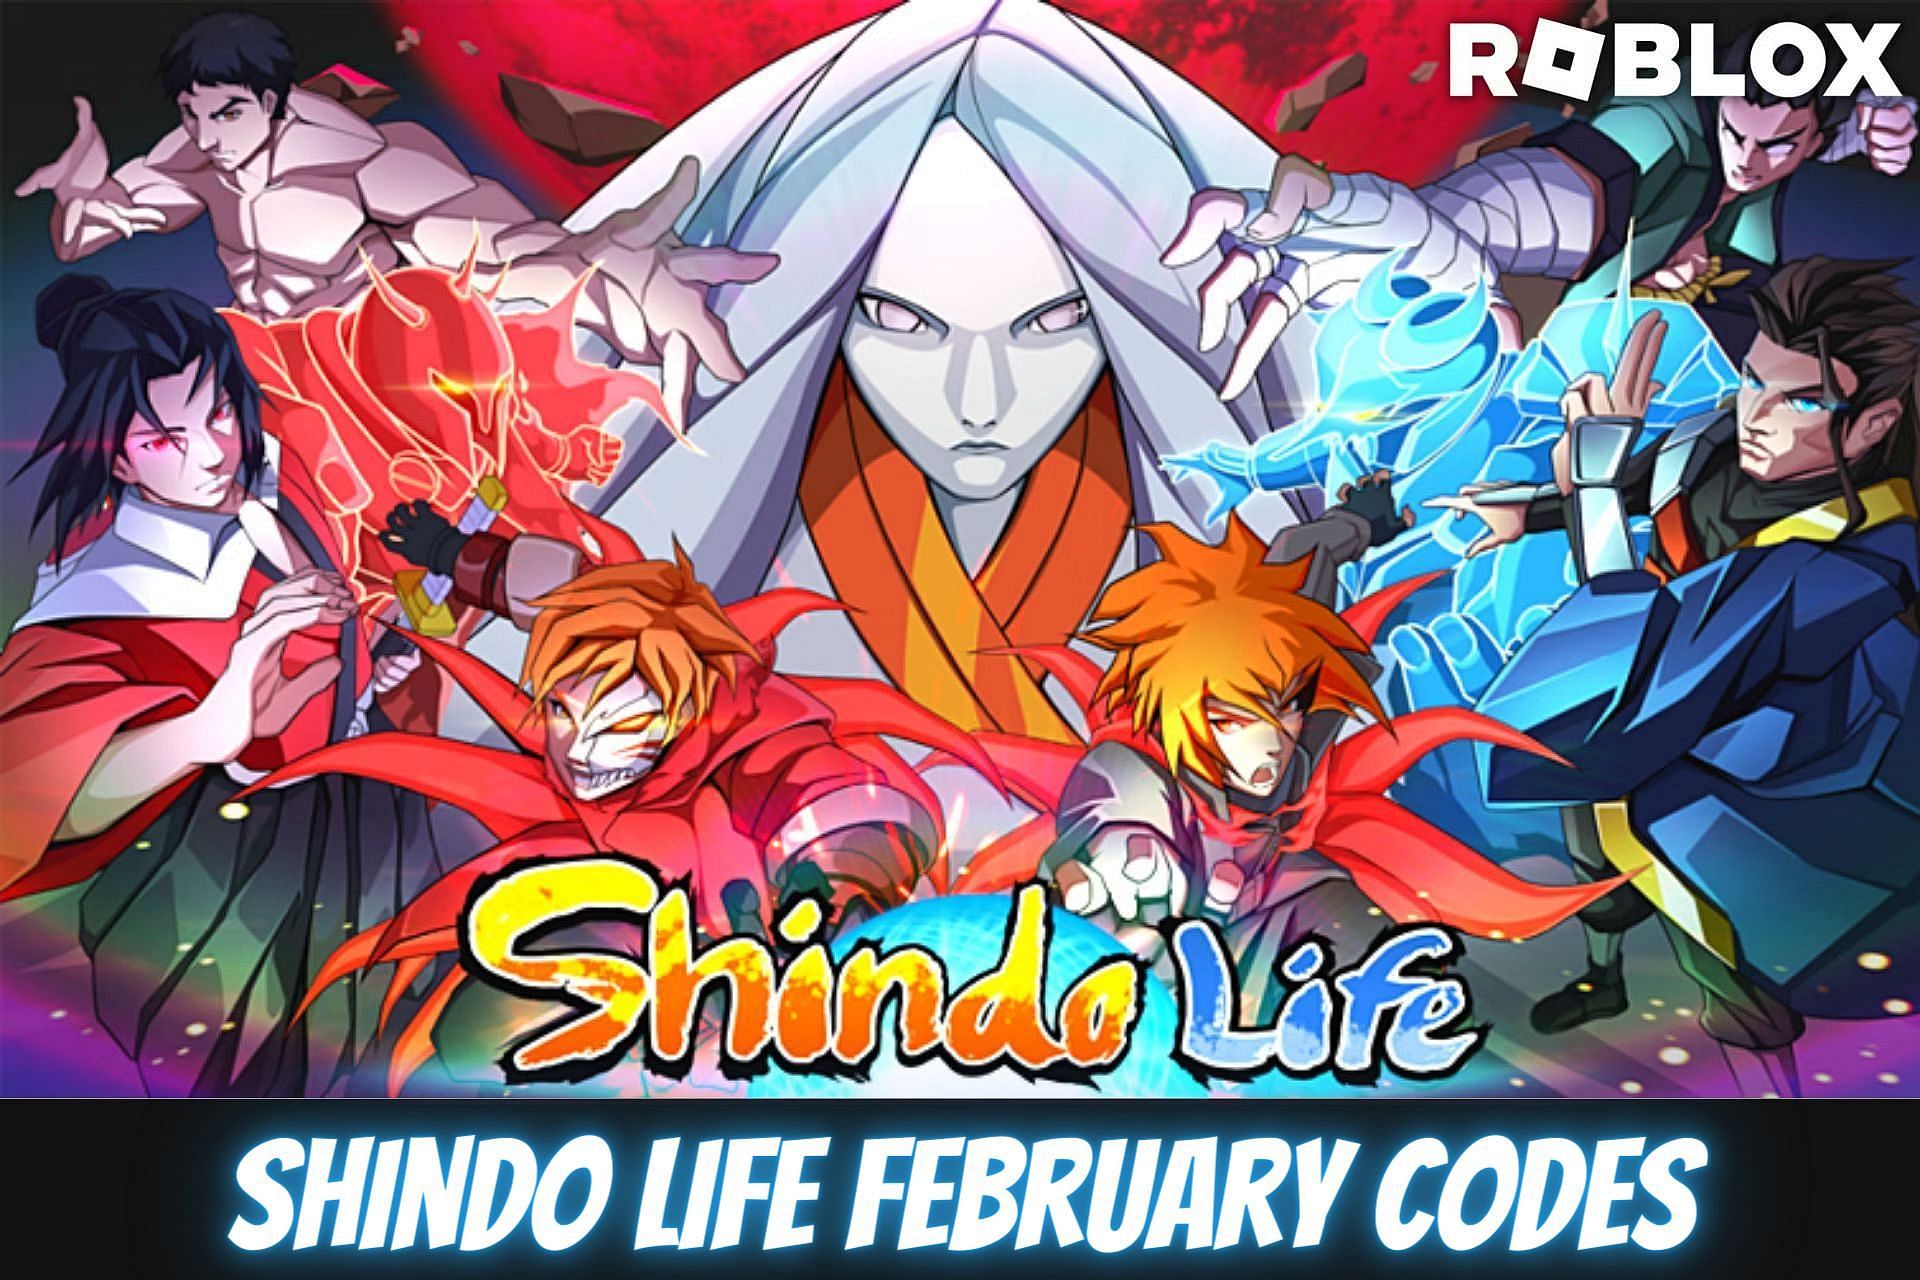 CODE] *NEW* KAGUYA LIVE EVENT UPDATE IN SHINDO LIFE ! Shindo Life